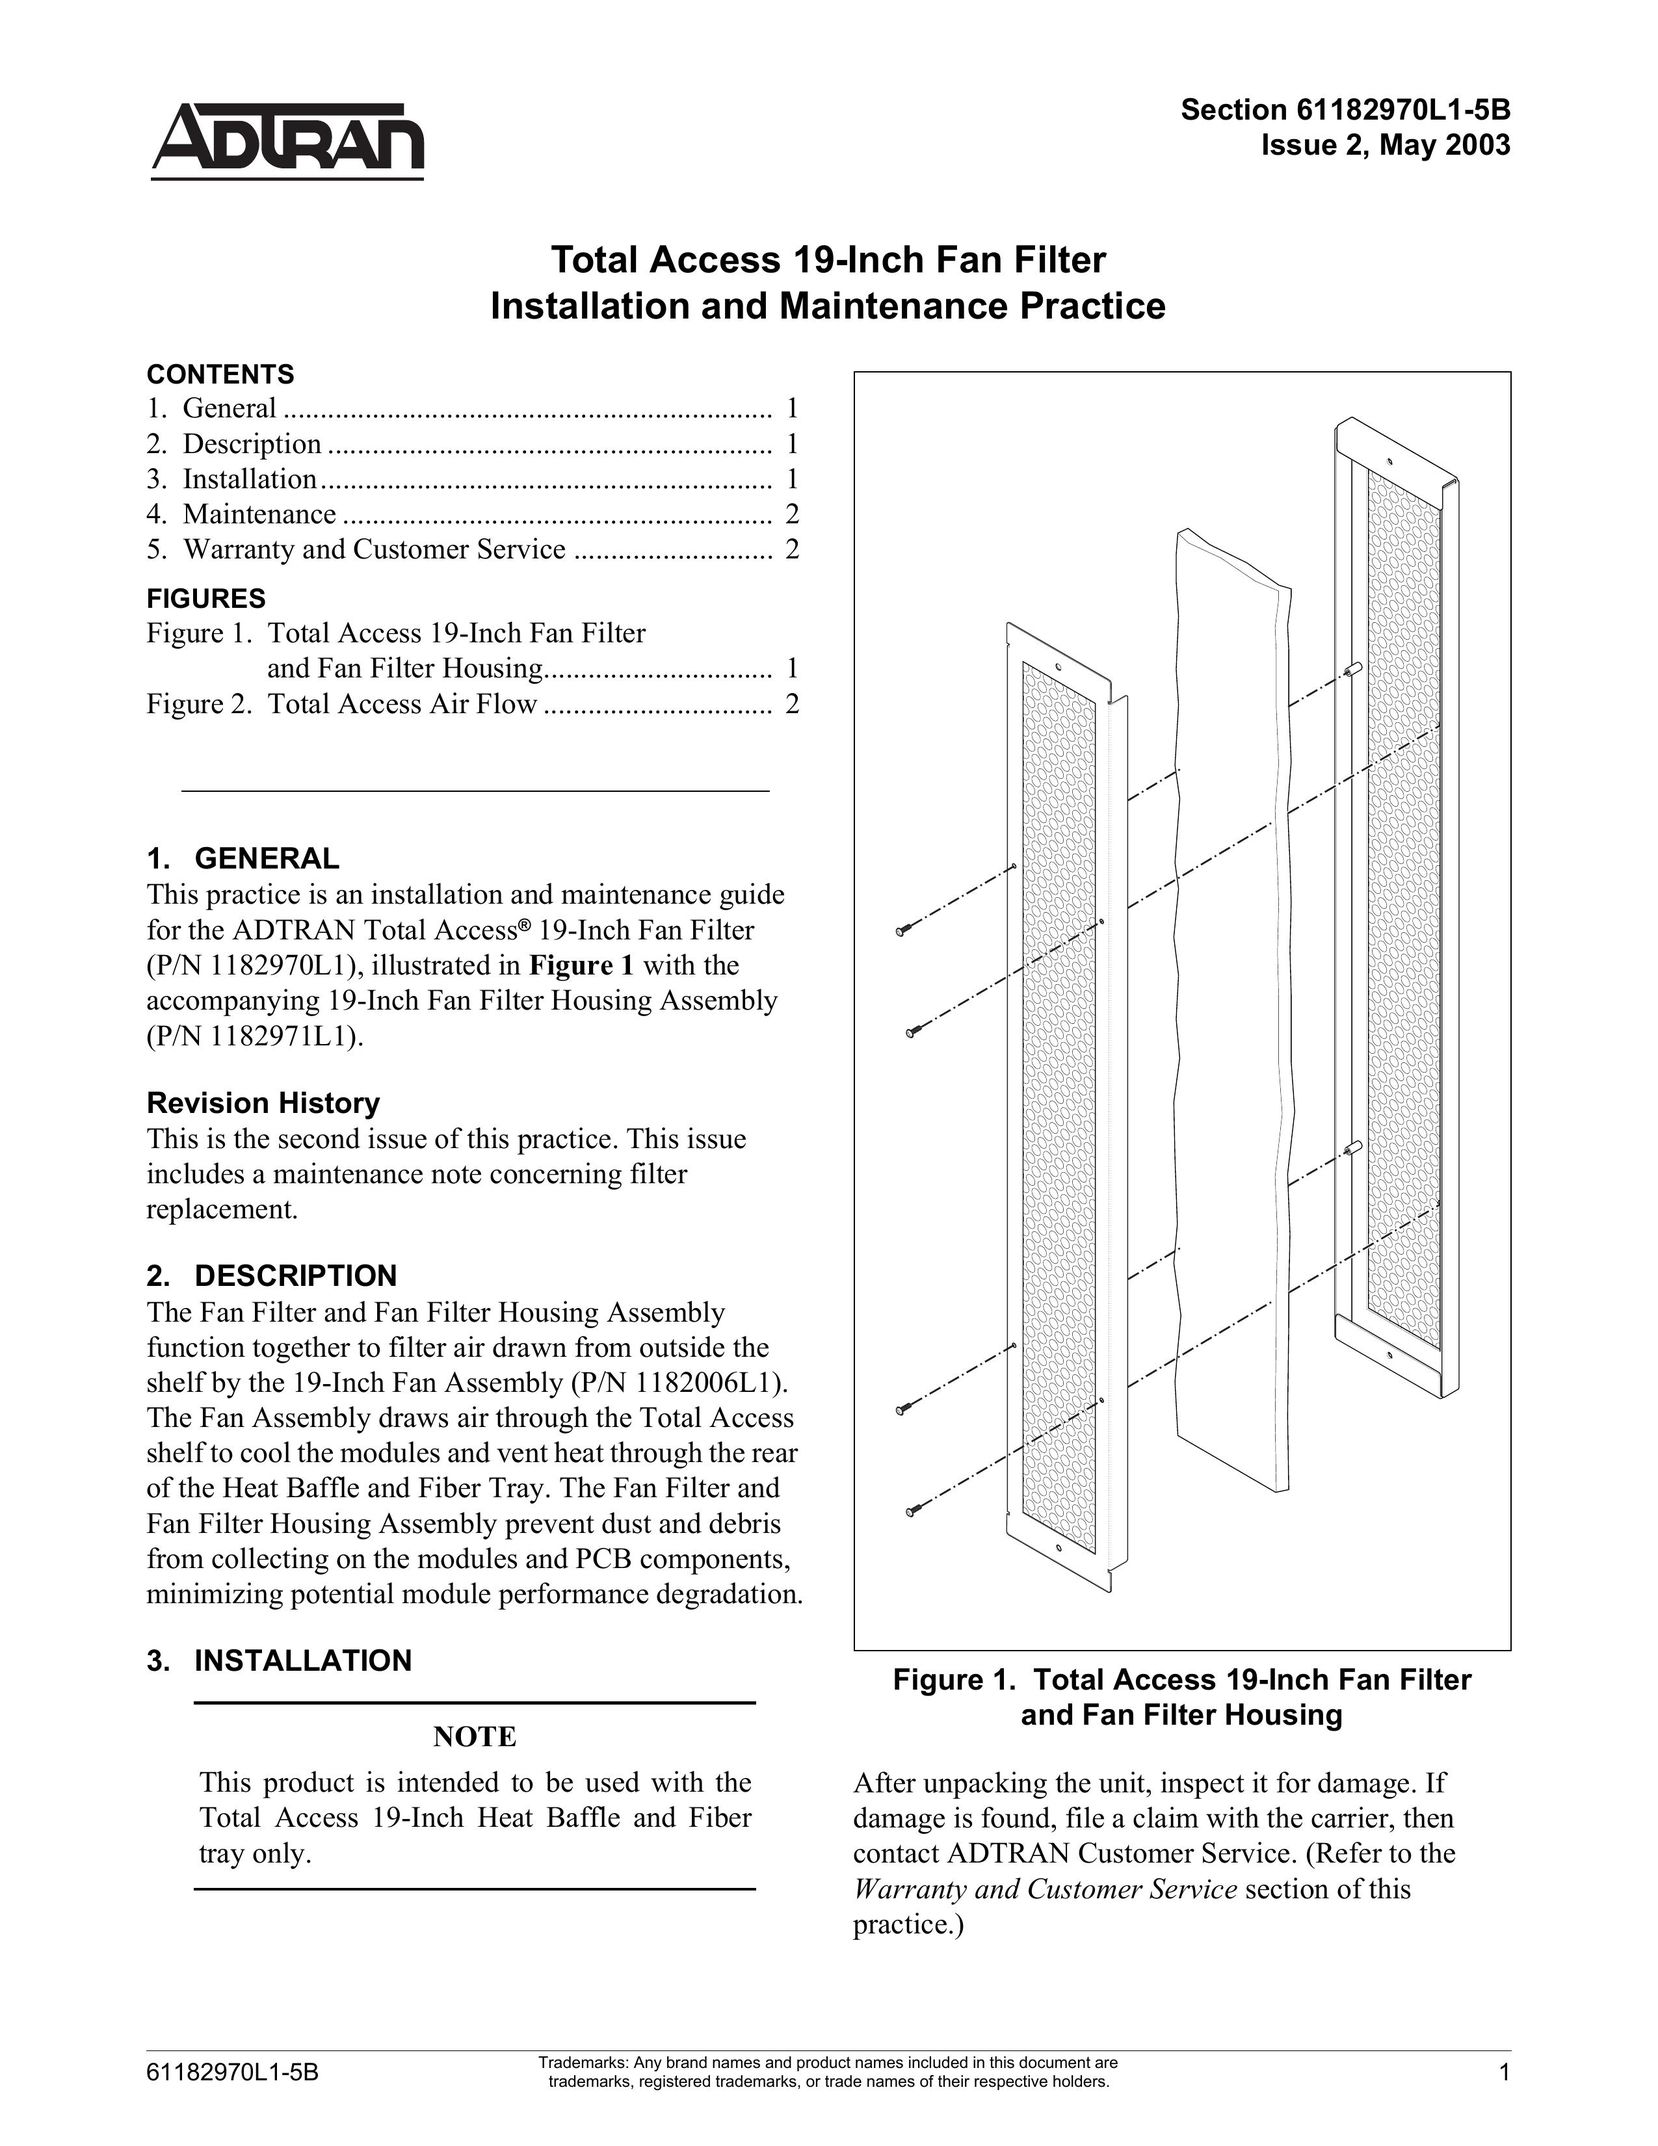 ADTRAN Total Access 19-Inch Fan Filter Air Cleaner User Manual